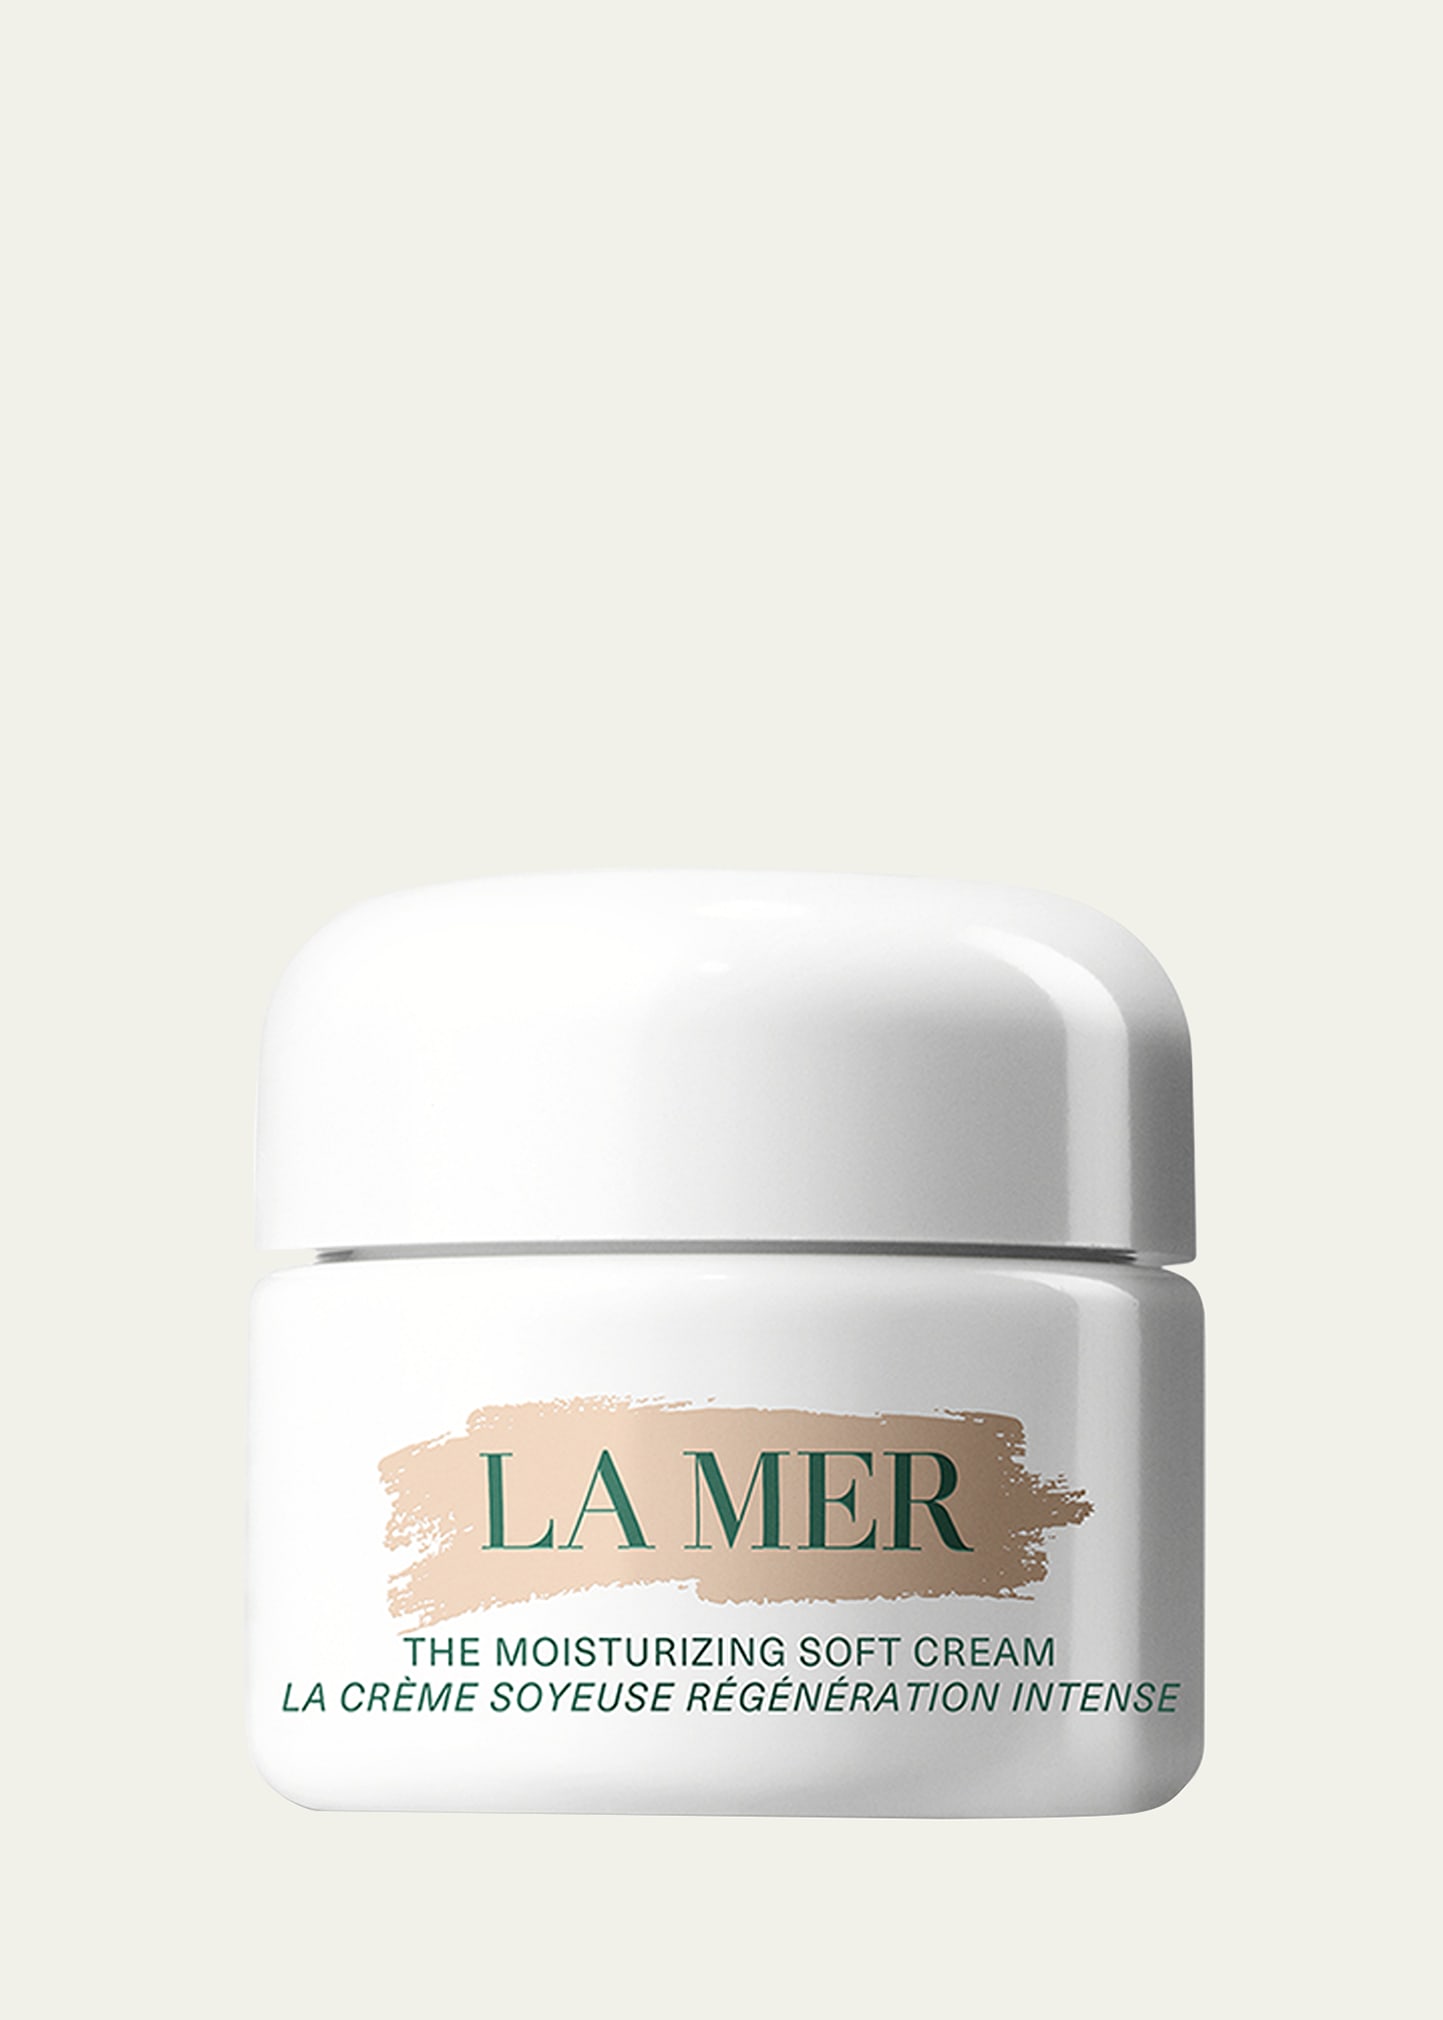 La Mer The Moisturizing Soft Cream, 1 oz.